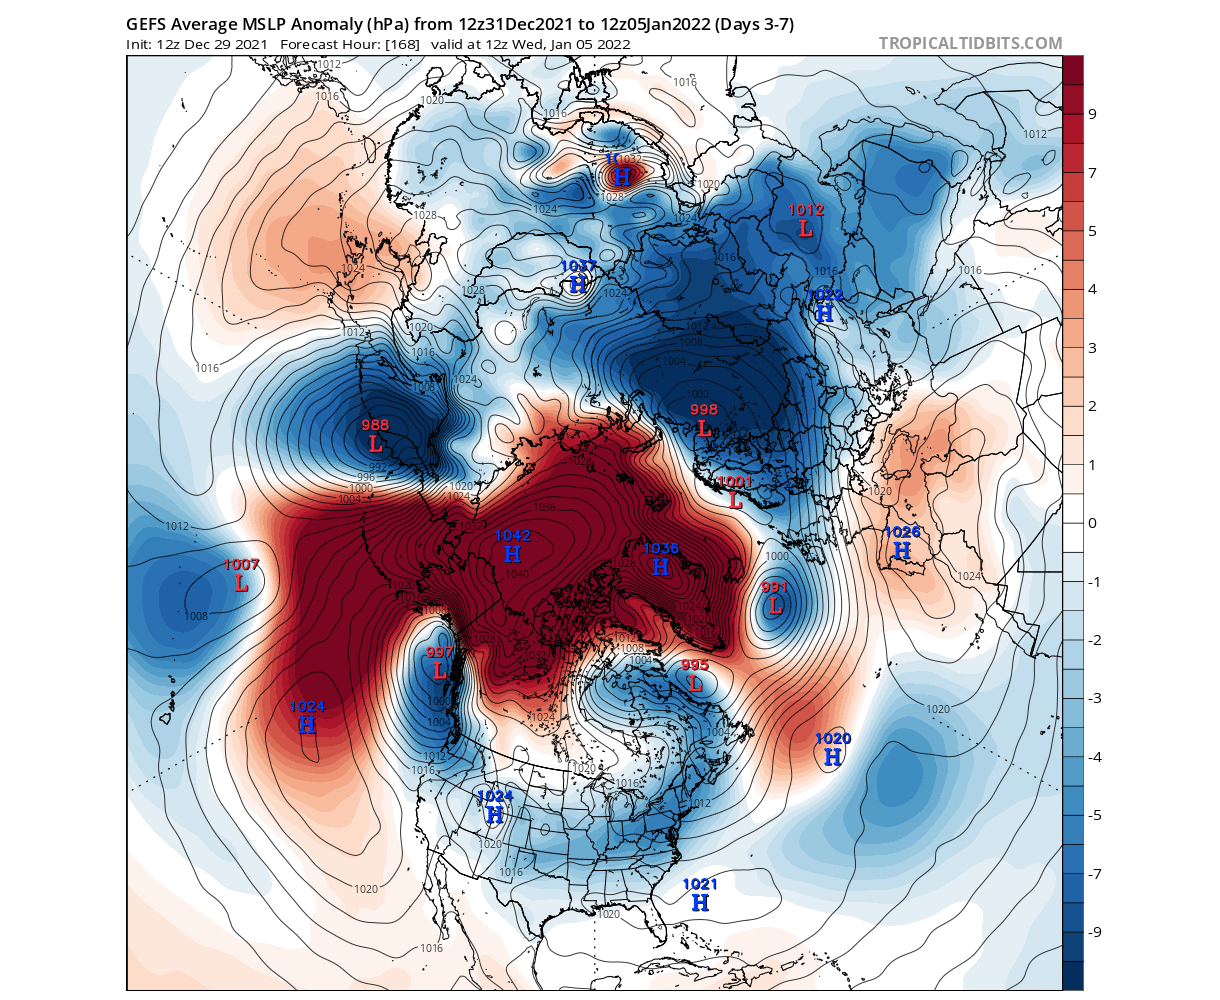 stratospheric-polar-vortex-warming-winter-season-forecast-pressure-pattern-anomaly-blocking